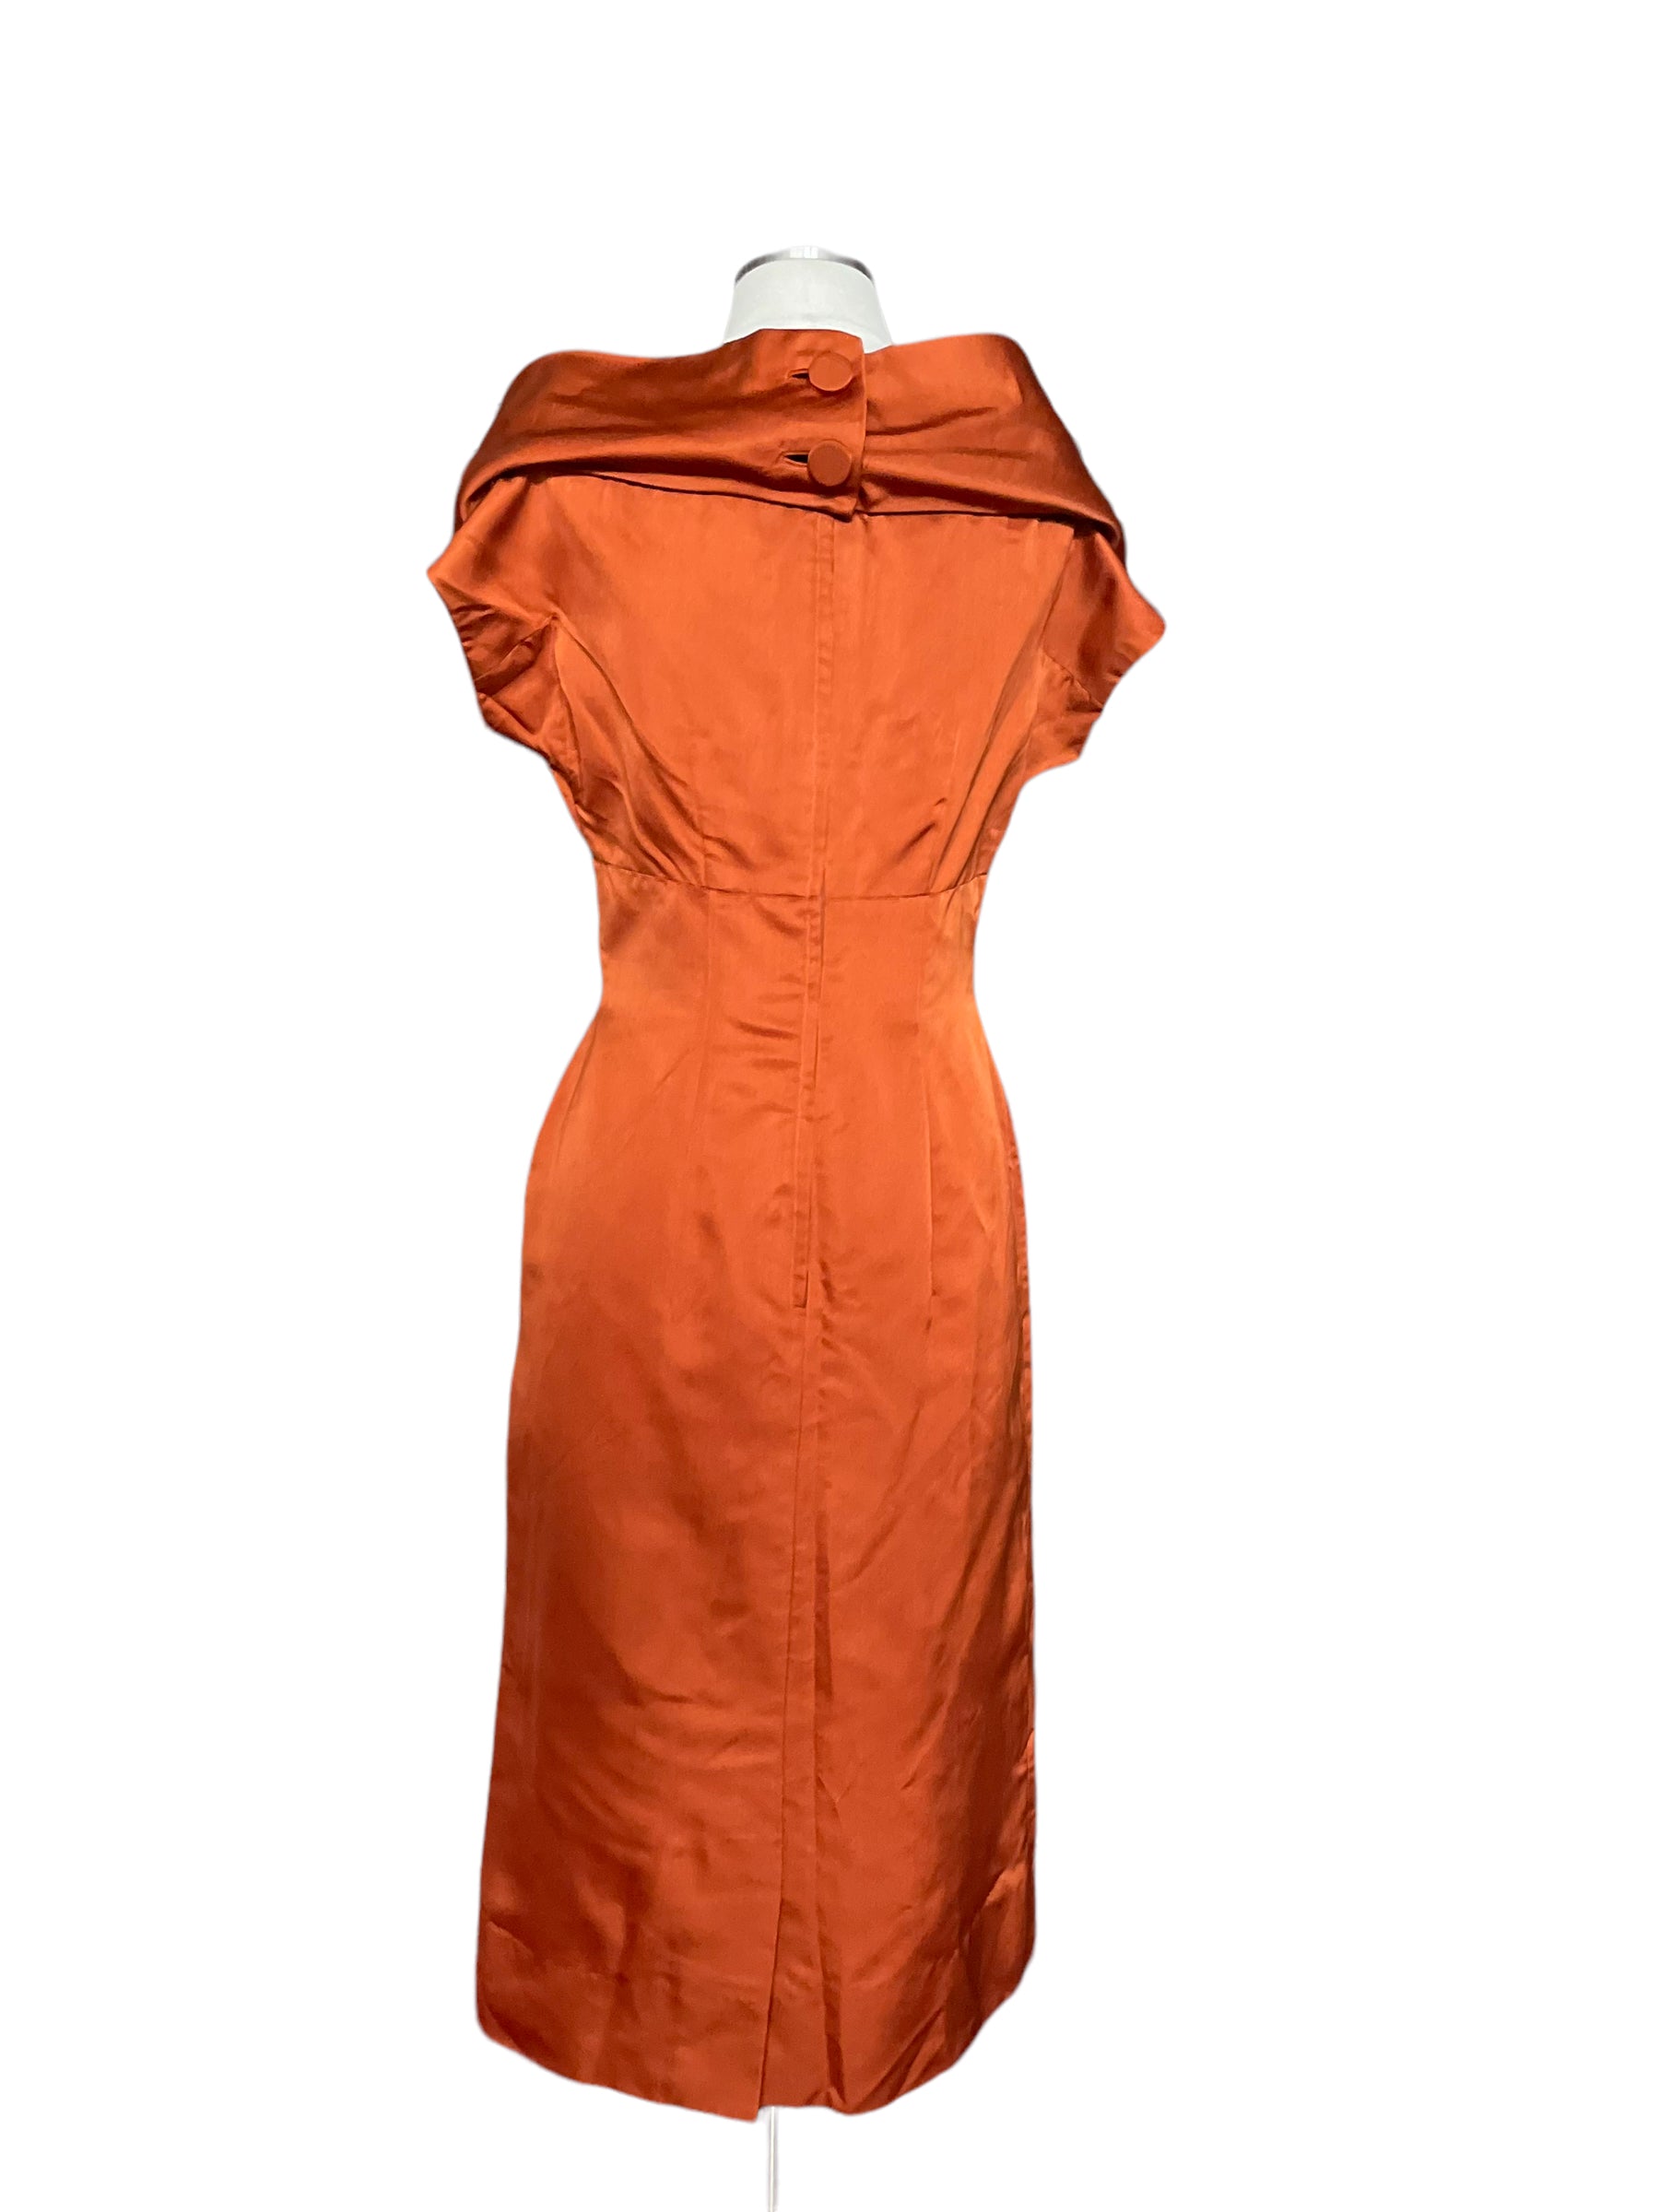 Full back view of Vintage 1950s Burnt Orange Silk Dress SZ M